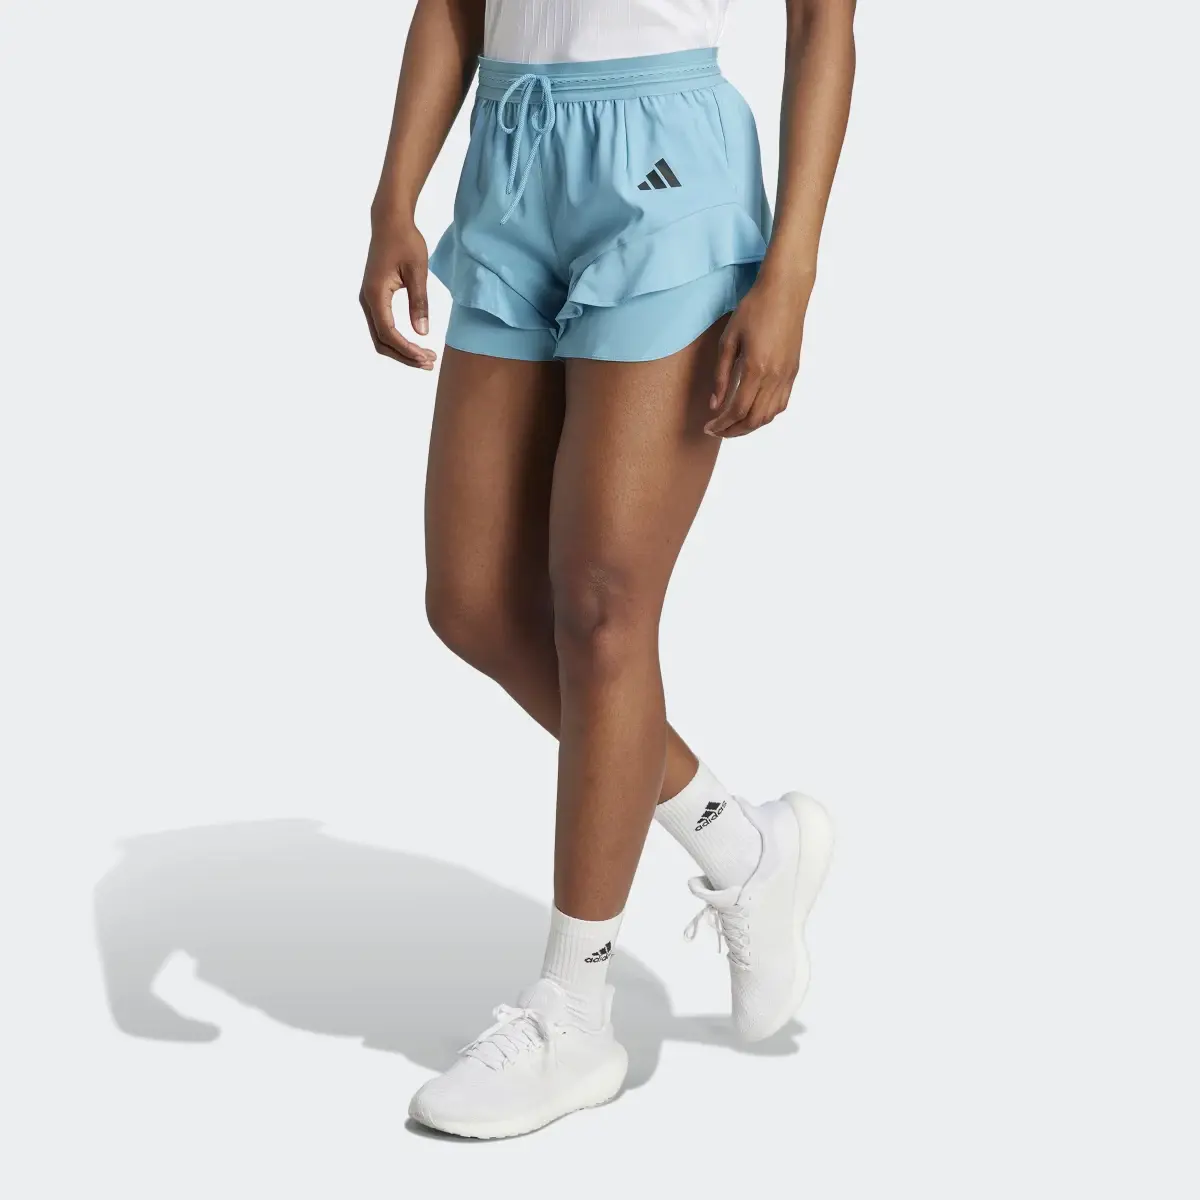 Adidas Made to be Remade Running Shorts. 1